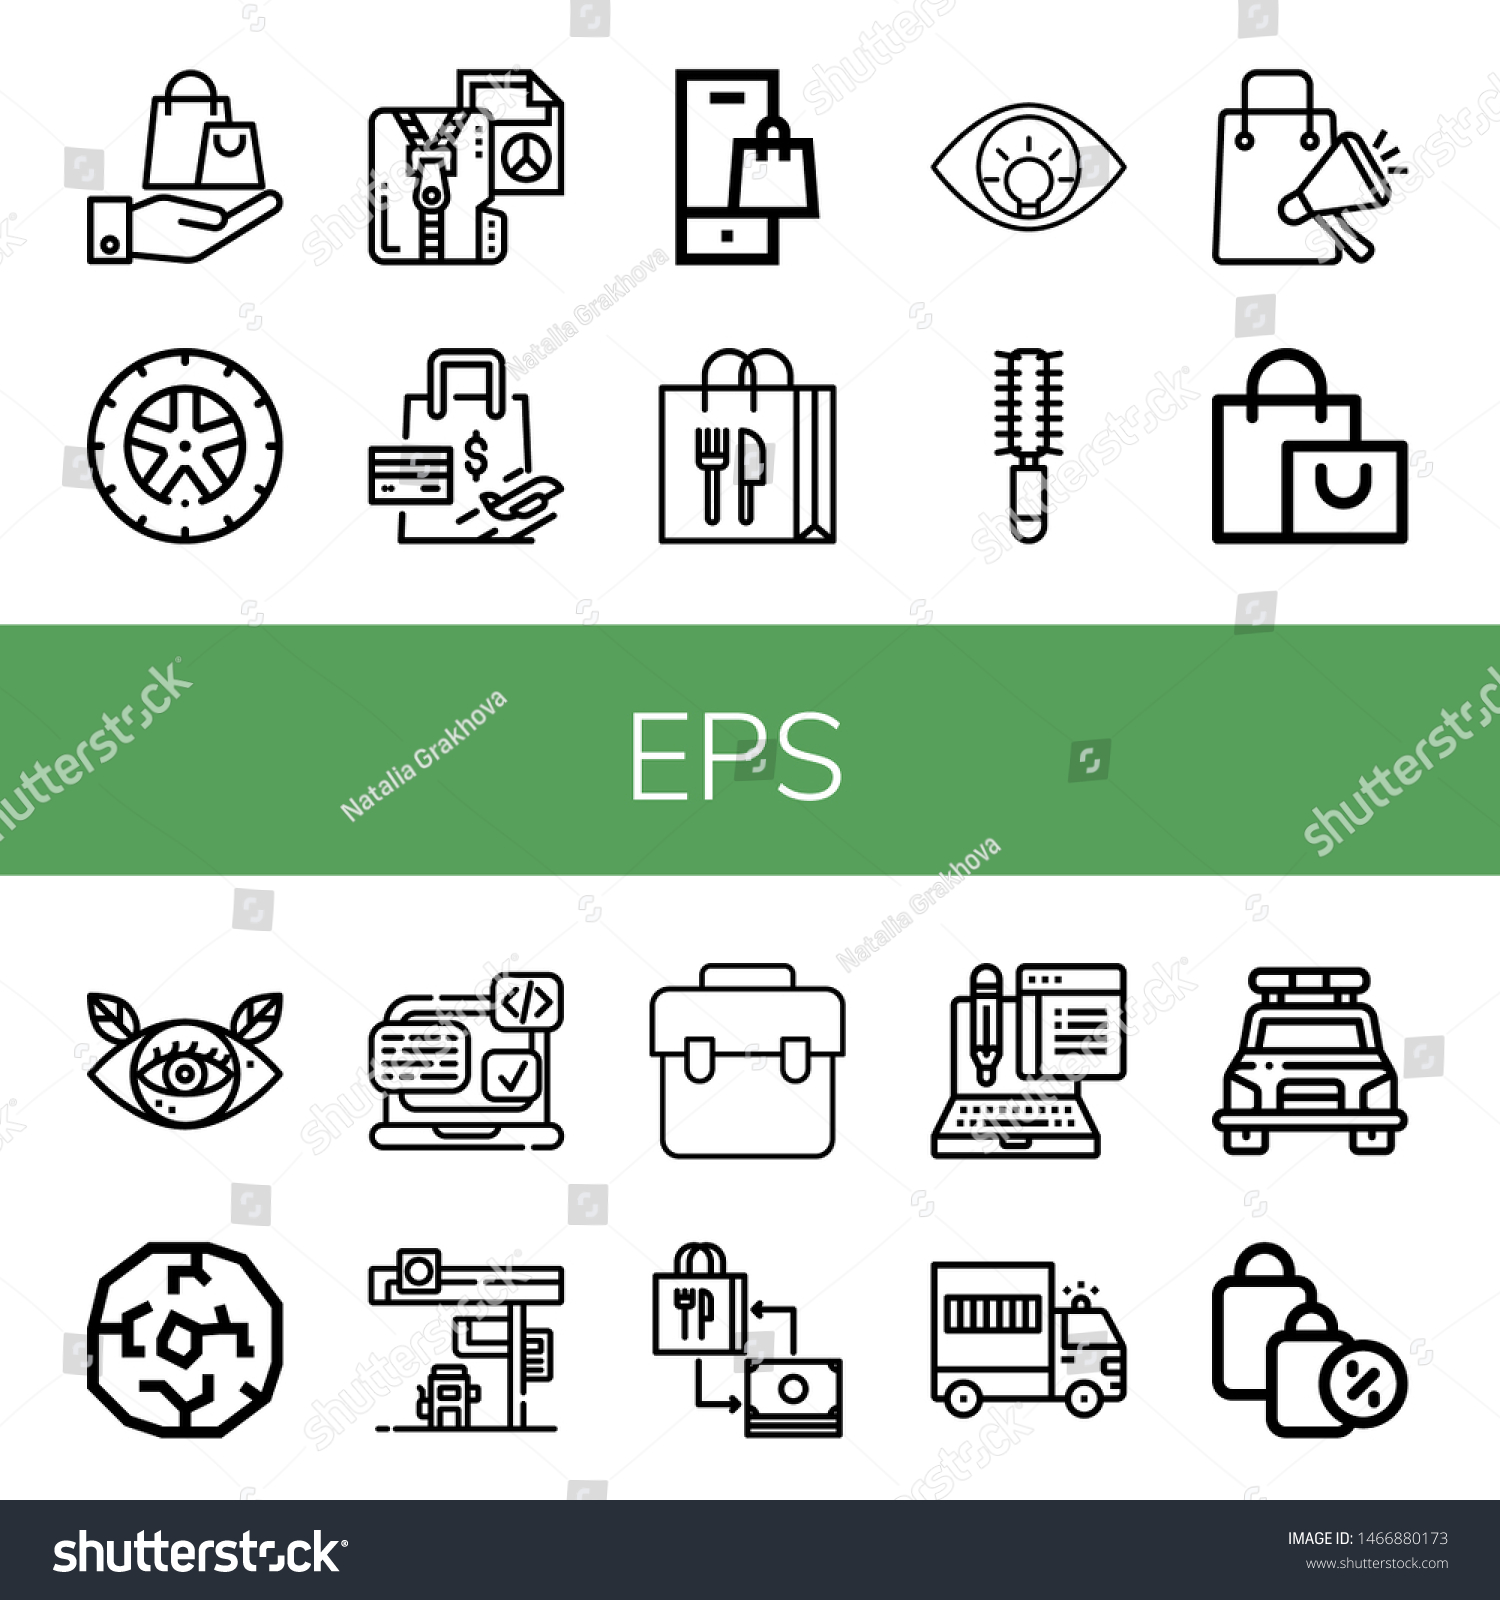 SVG of Set of eps icons such as Shopping bag, Wheel, Compressed file, Eye, Hair brush, Svg, Gas station, Bag, Typing, Prisoner transport vehicle, Police car , eps svg